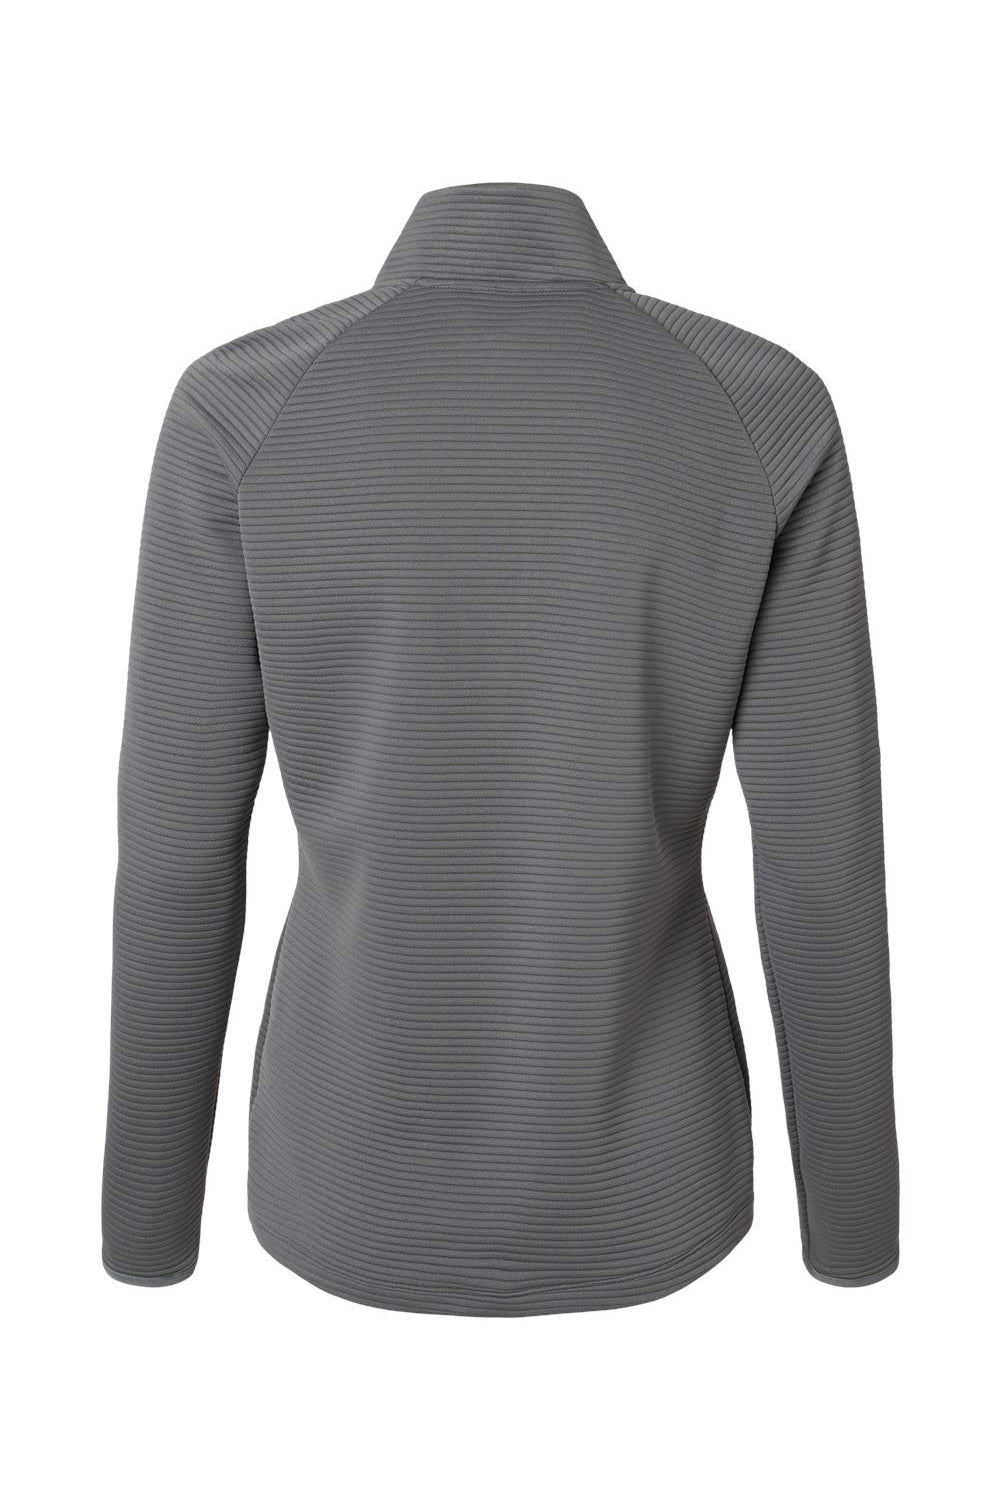 Adidas A589 Womens Spacer 1/4 Zip Sweatshirt Grey Flat Back